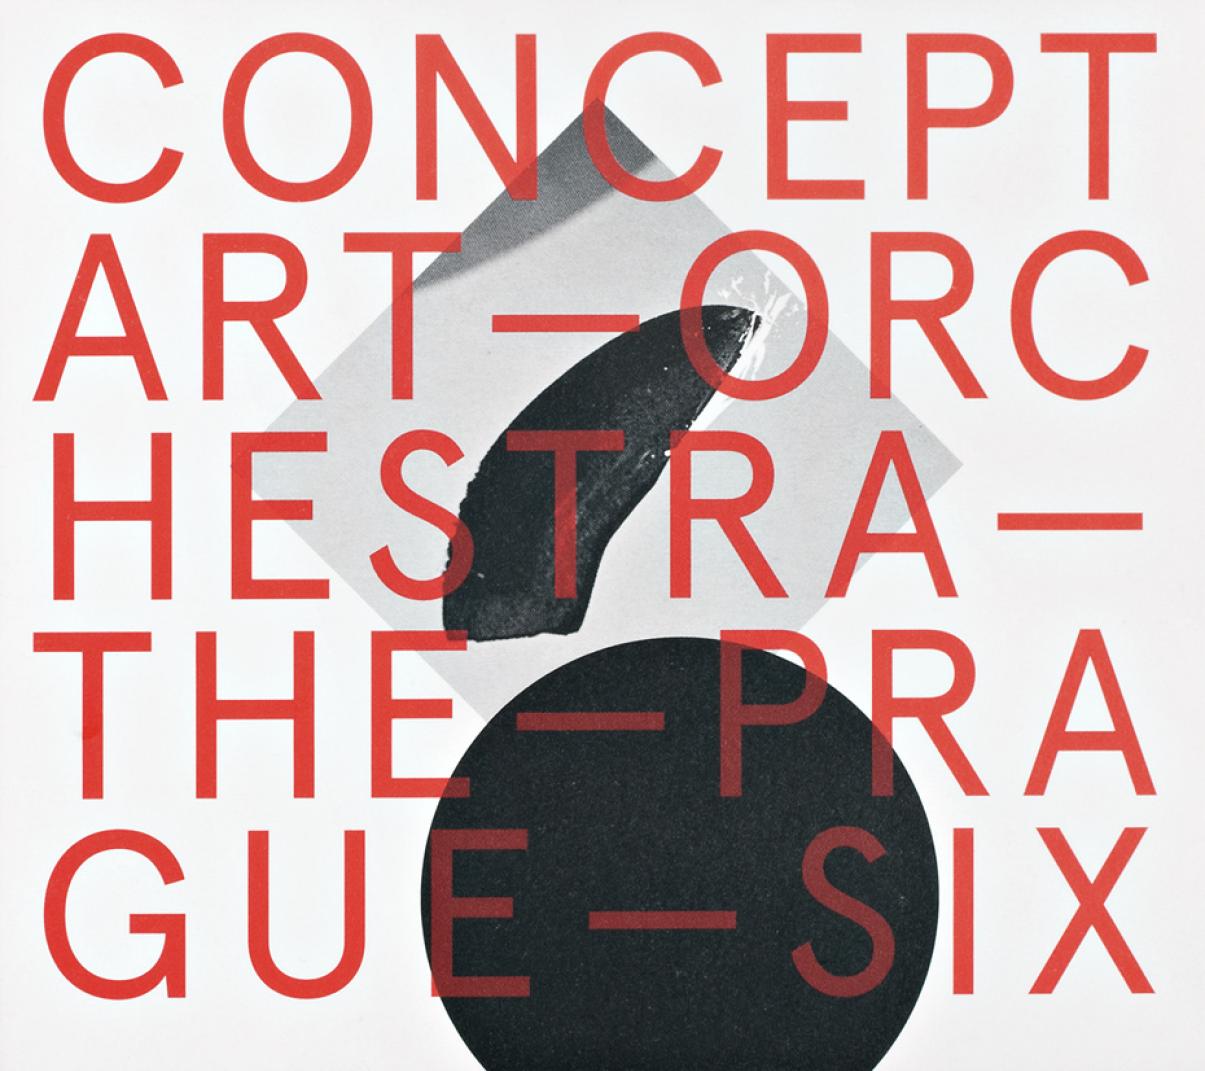 Concept Art Orchestra: The Prague Six